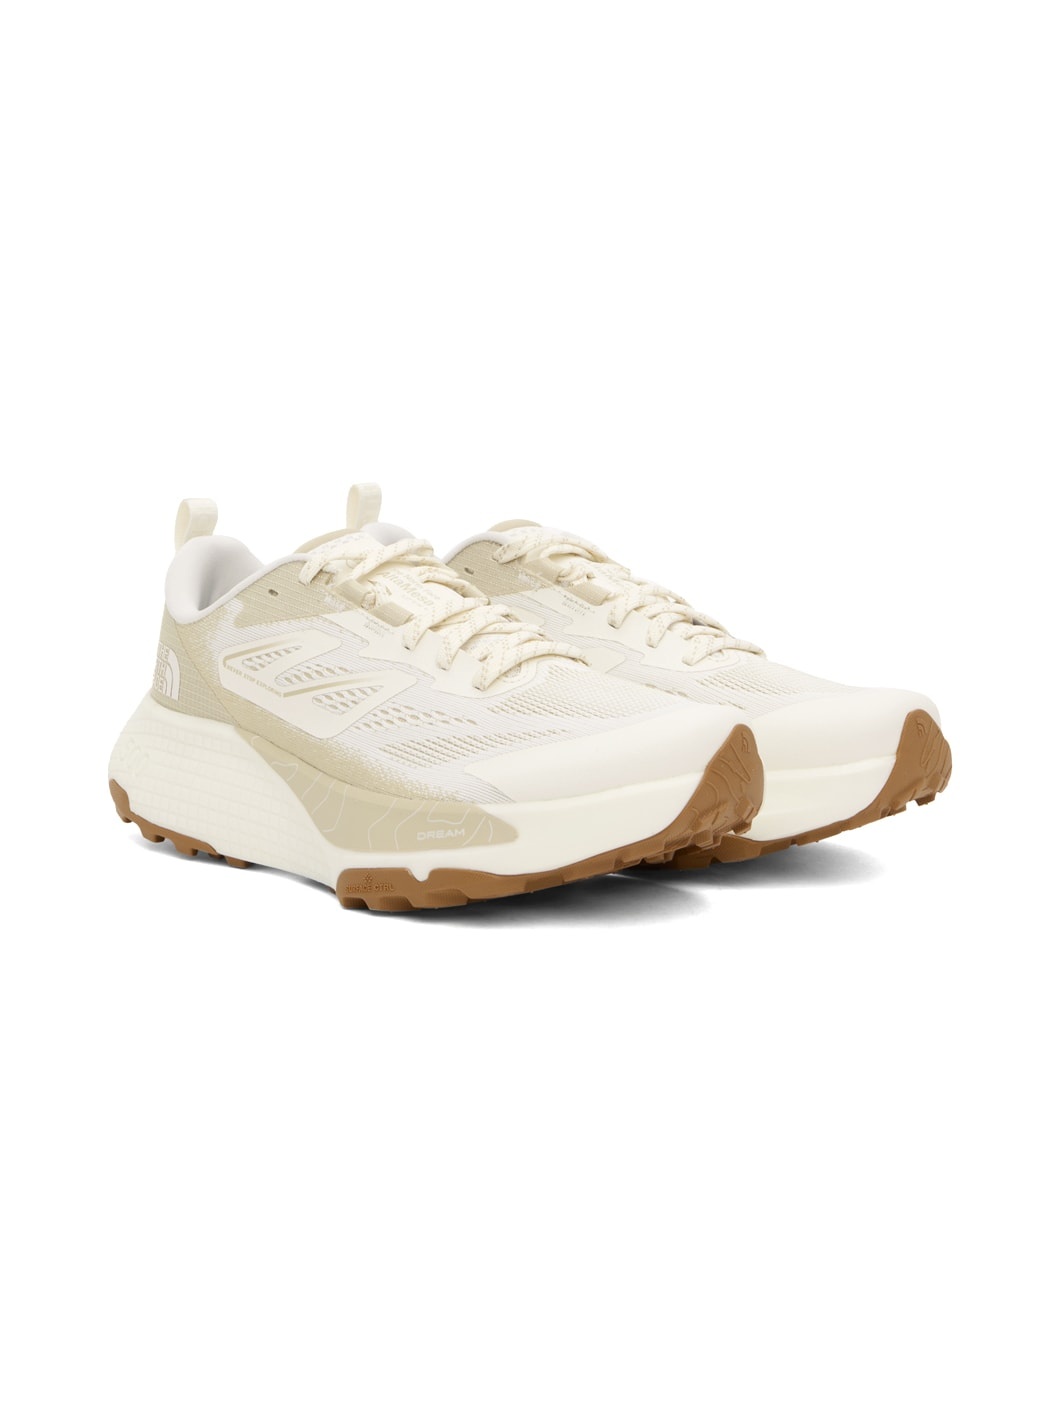 Off-White & Beige Altamesa 500 Sneakers - 4